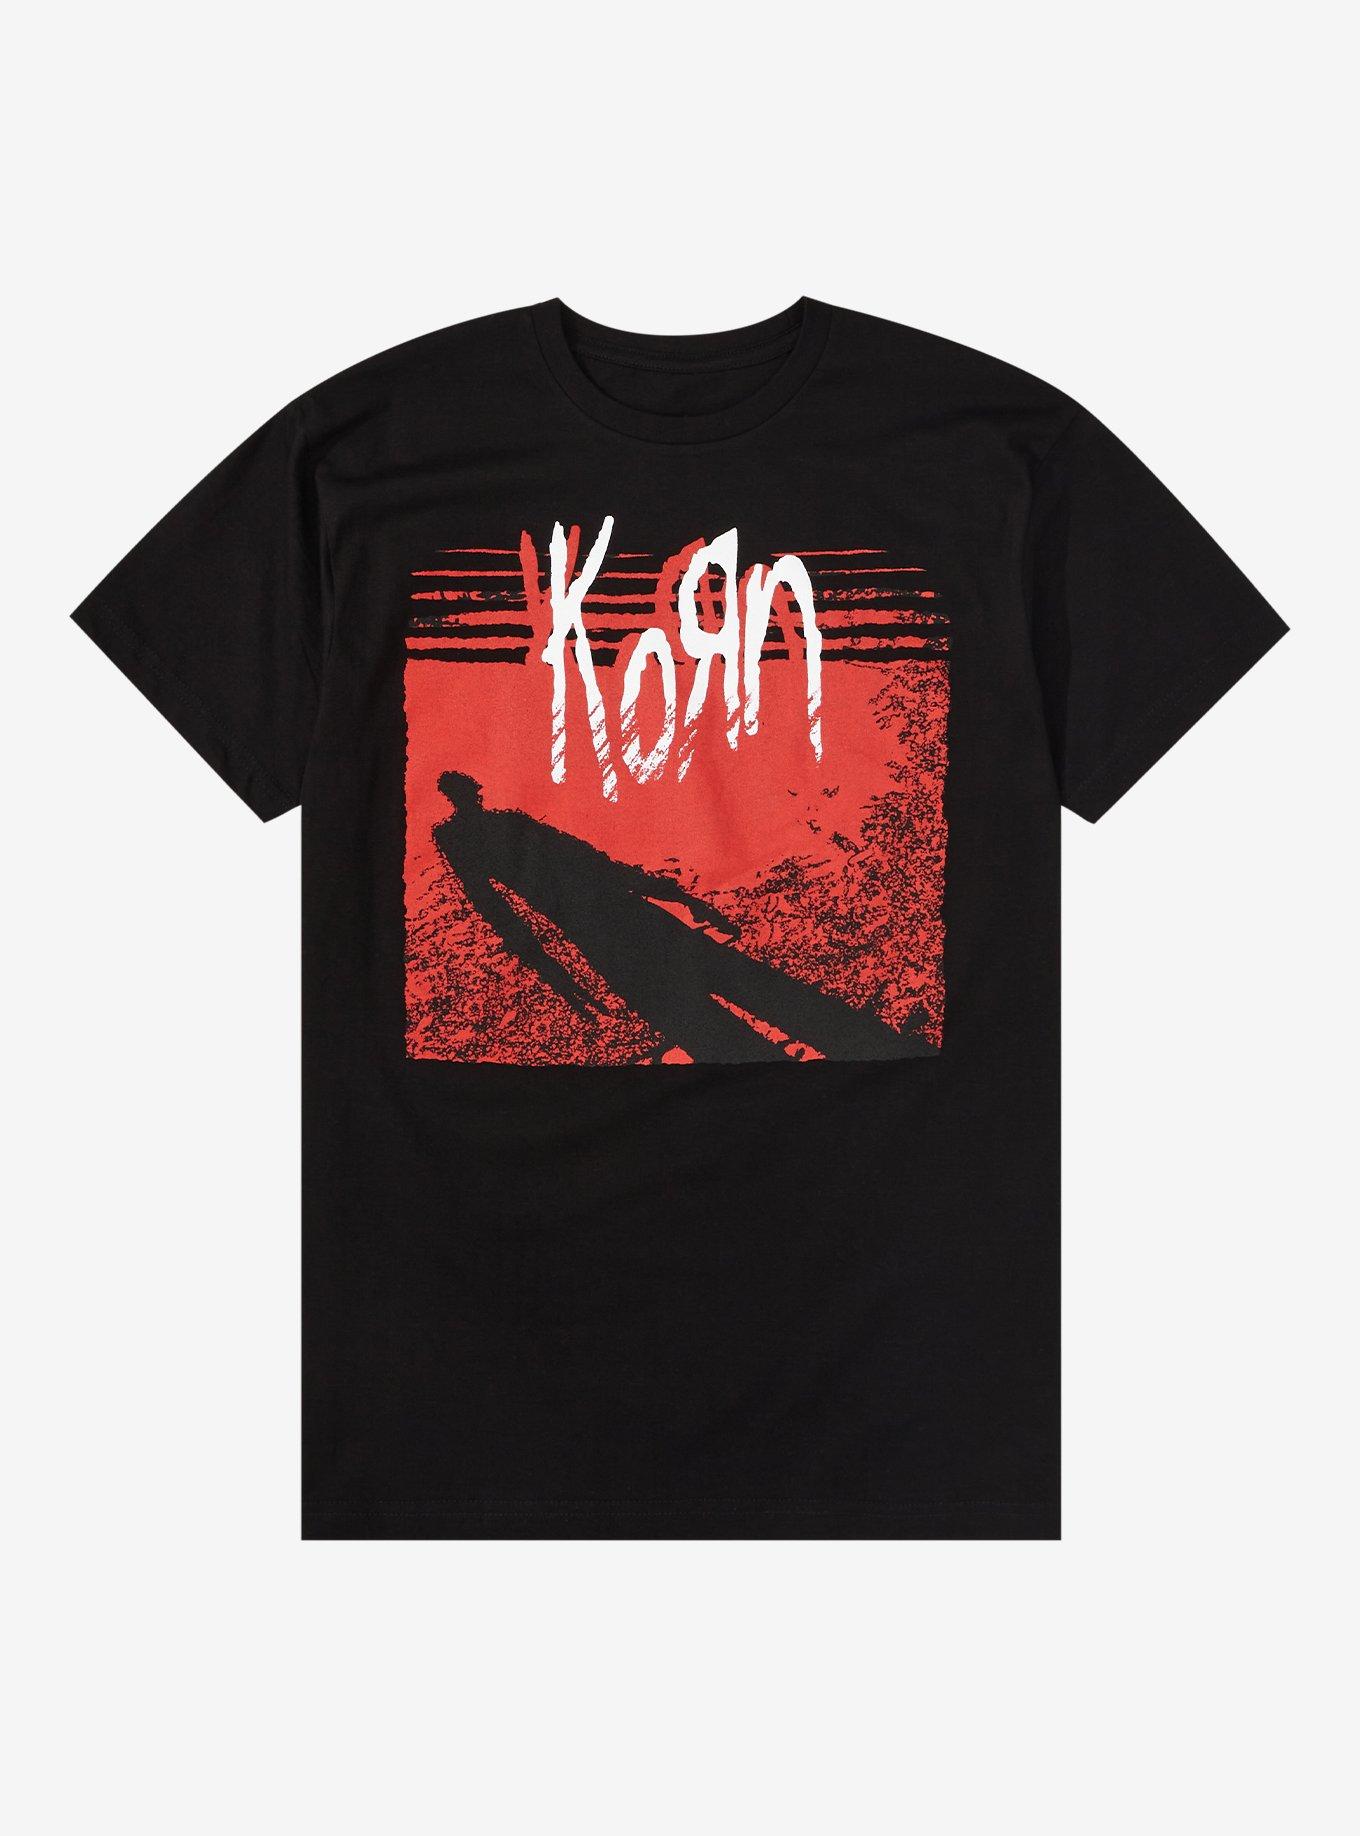 Korn Shadow Man T-Shirt Product Image